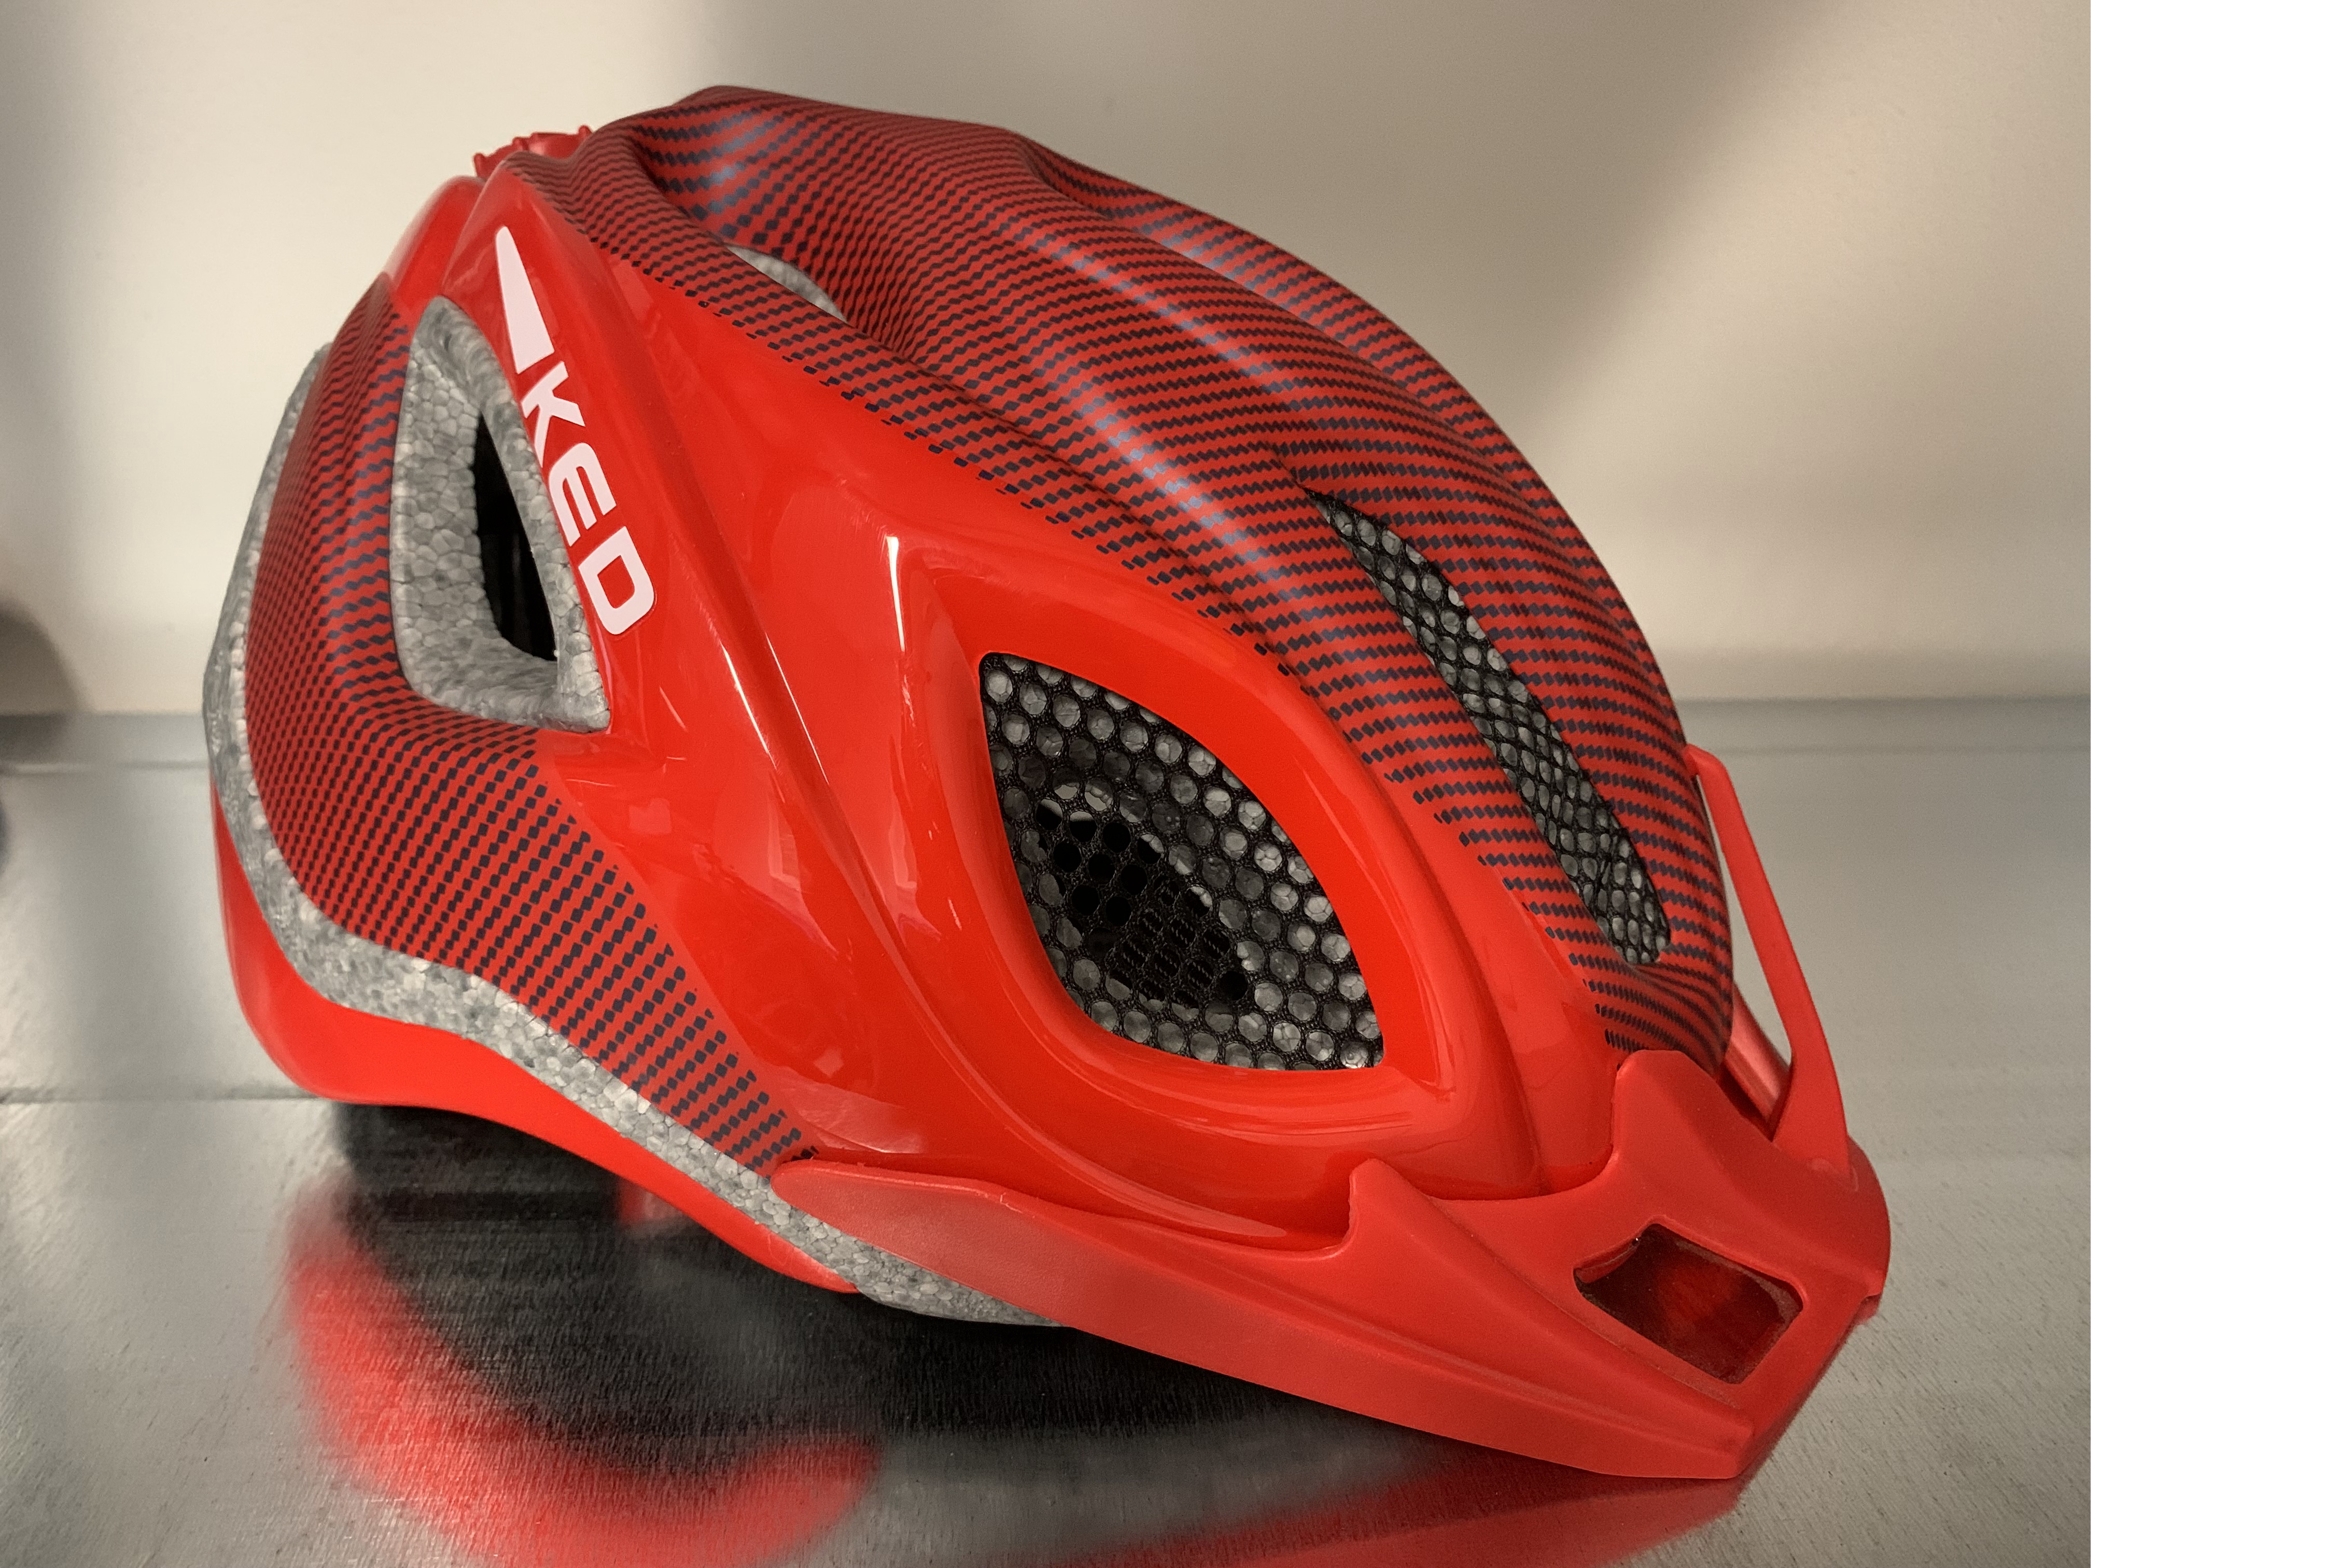 Helm KED Certus Pro